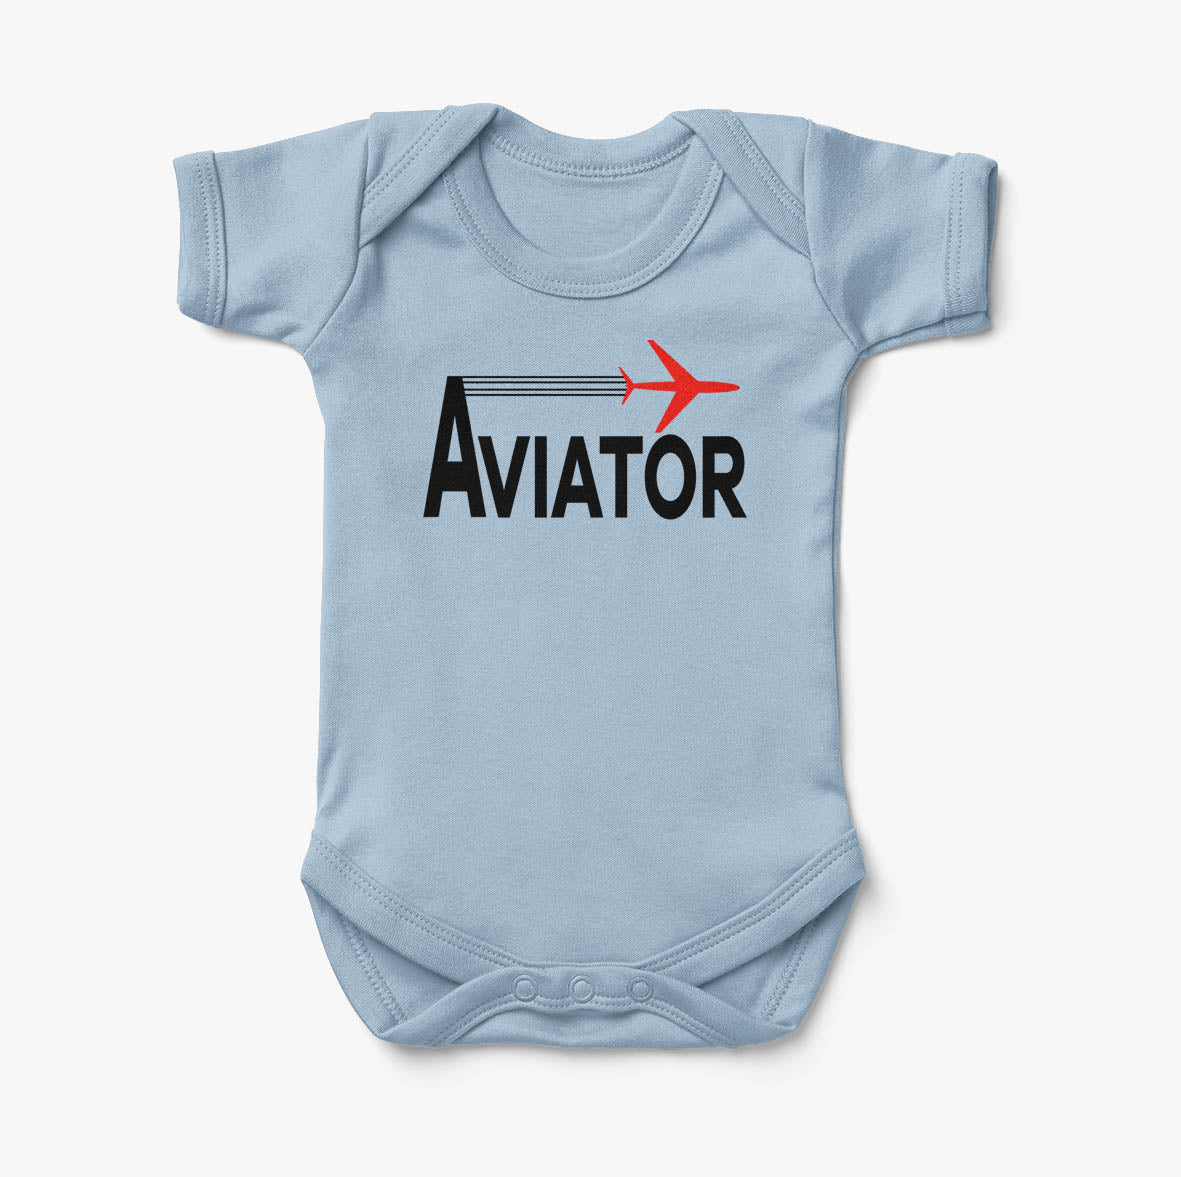 Aviator Designed Baby Bodysuits